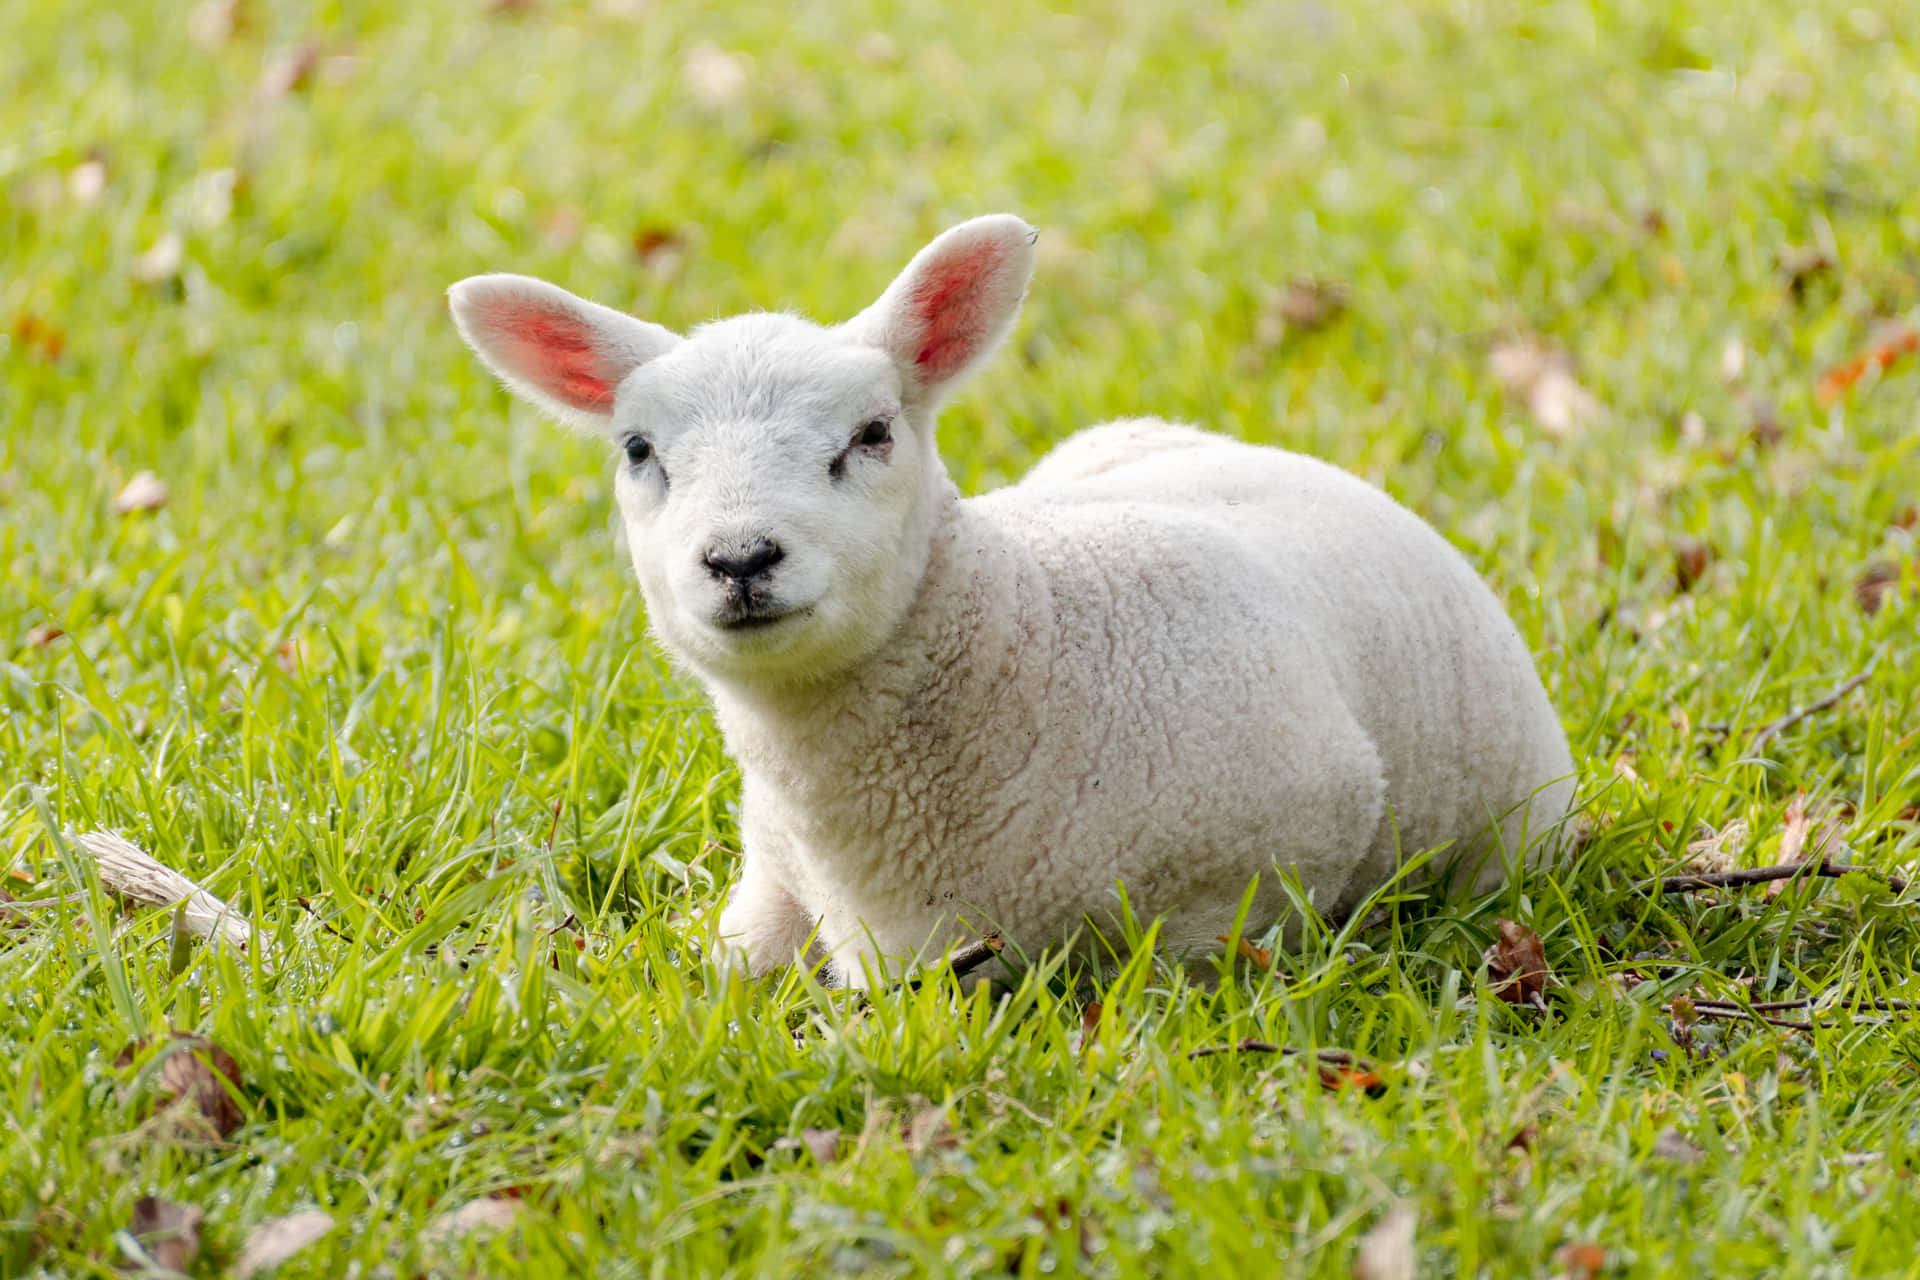 Adorable Little Lamb in a Field